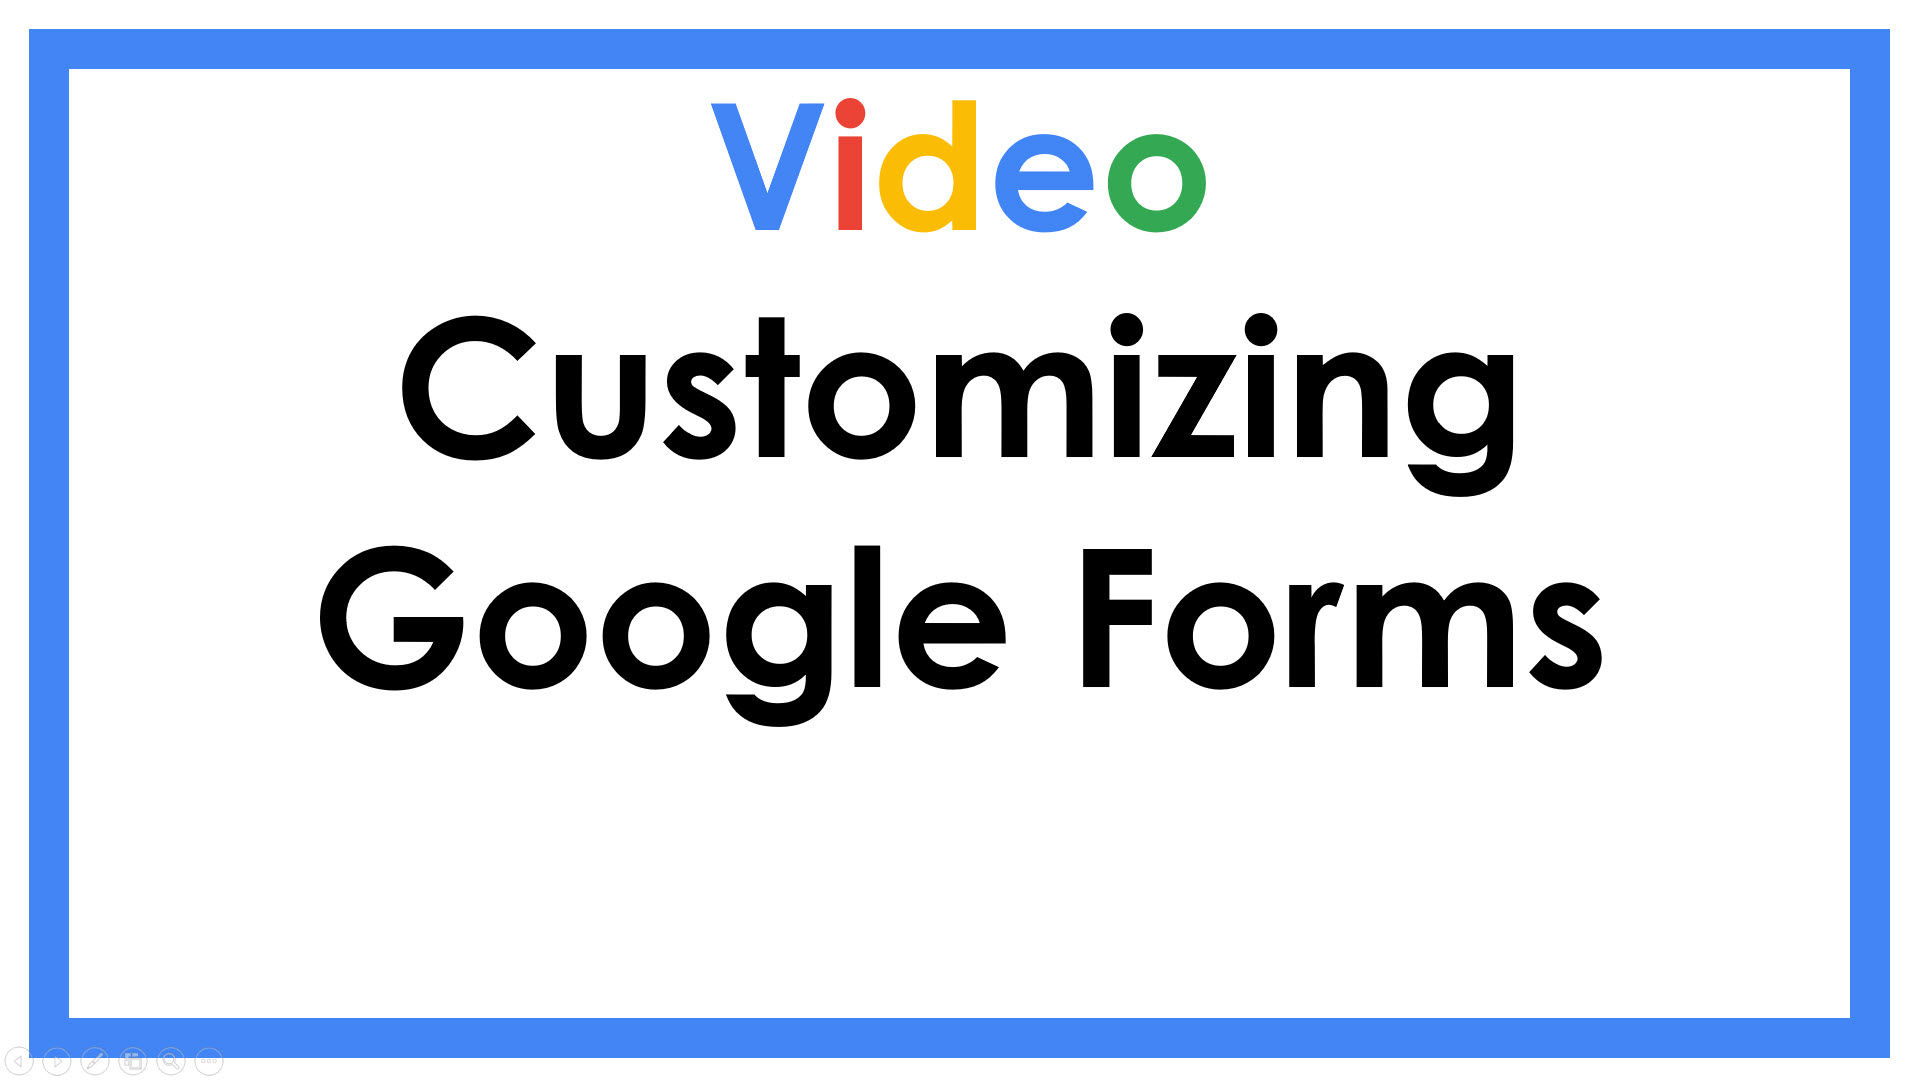 Customizing Google Forms